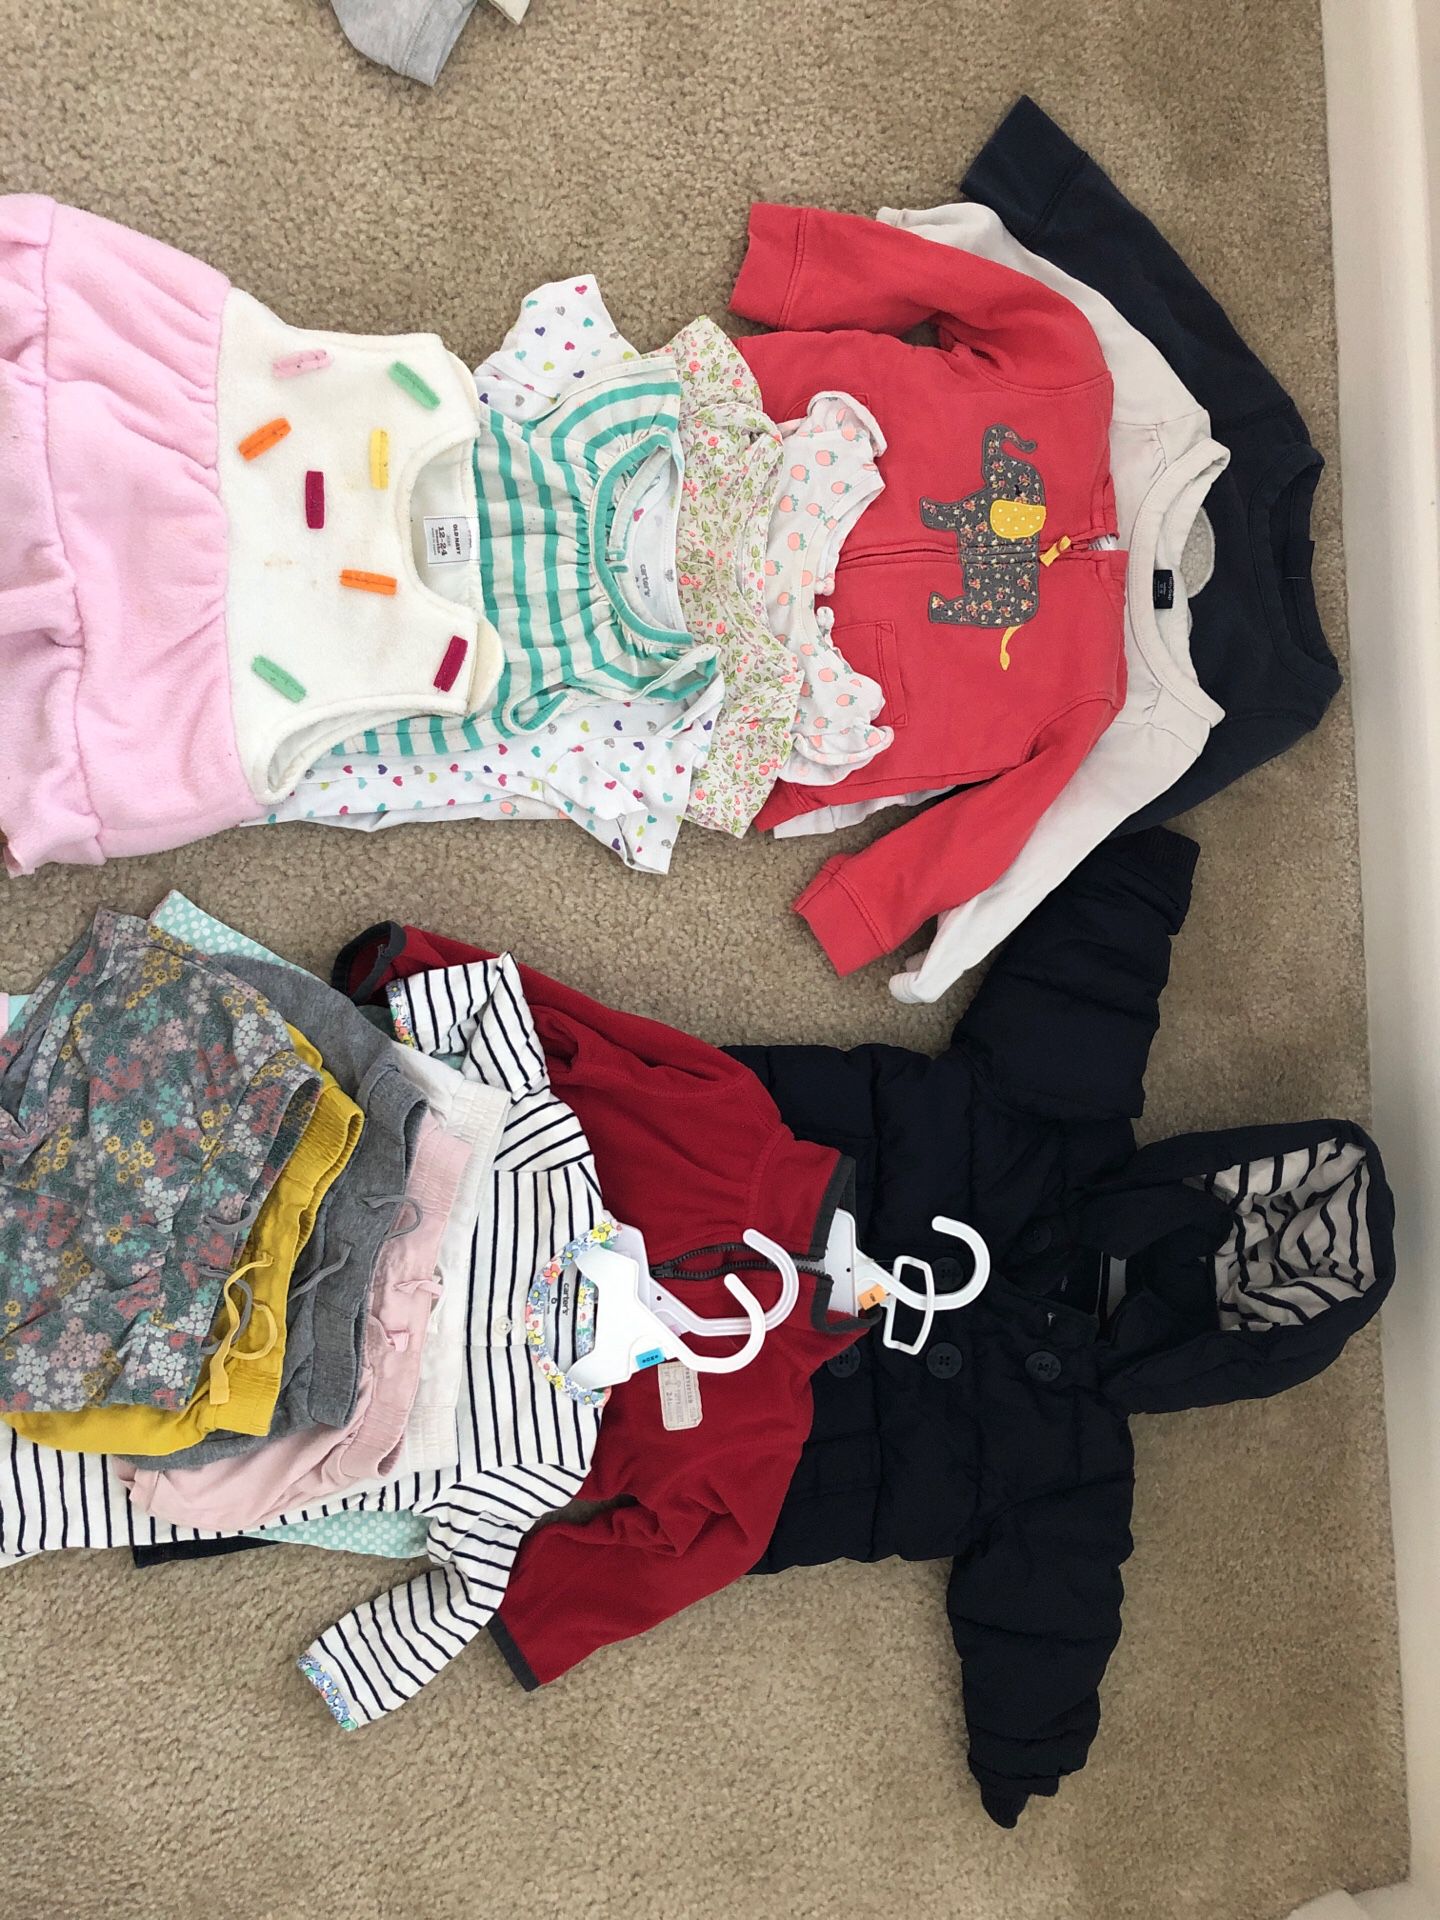 6-12 through 12-18 month girl clothes